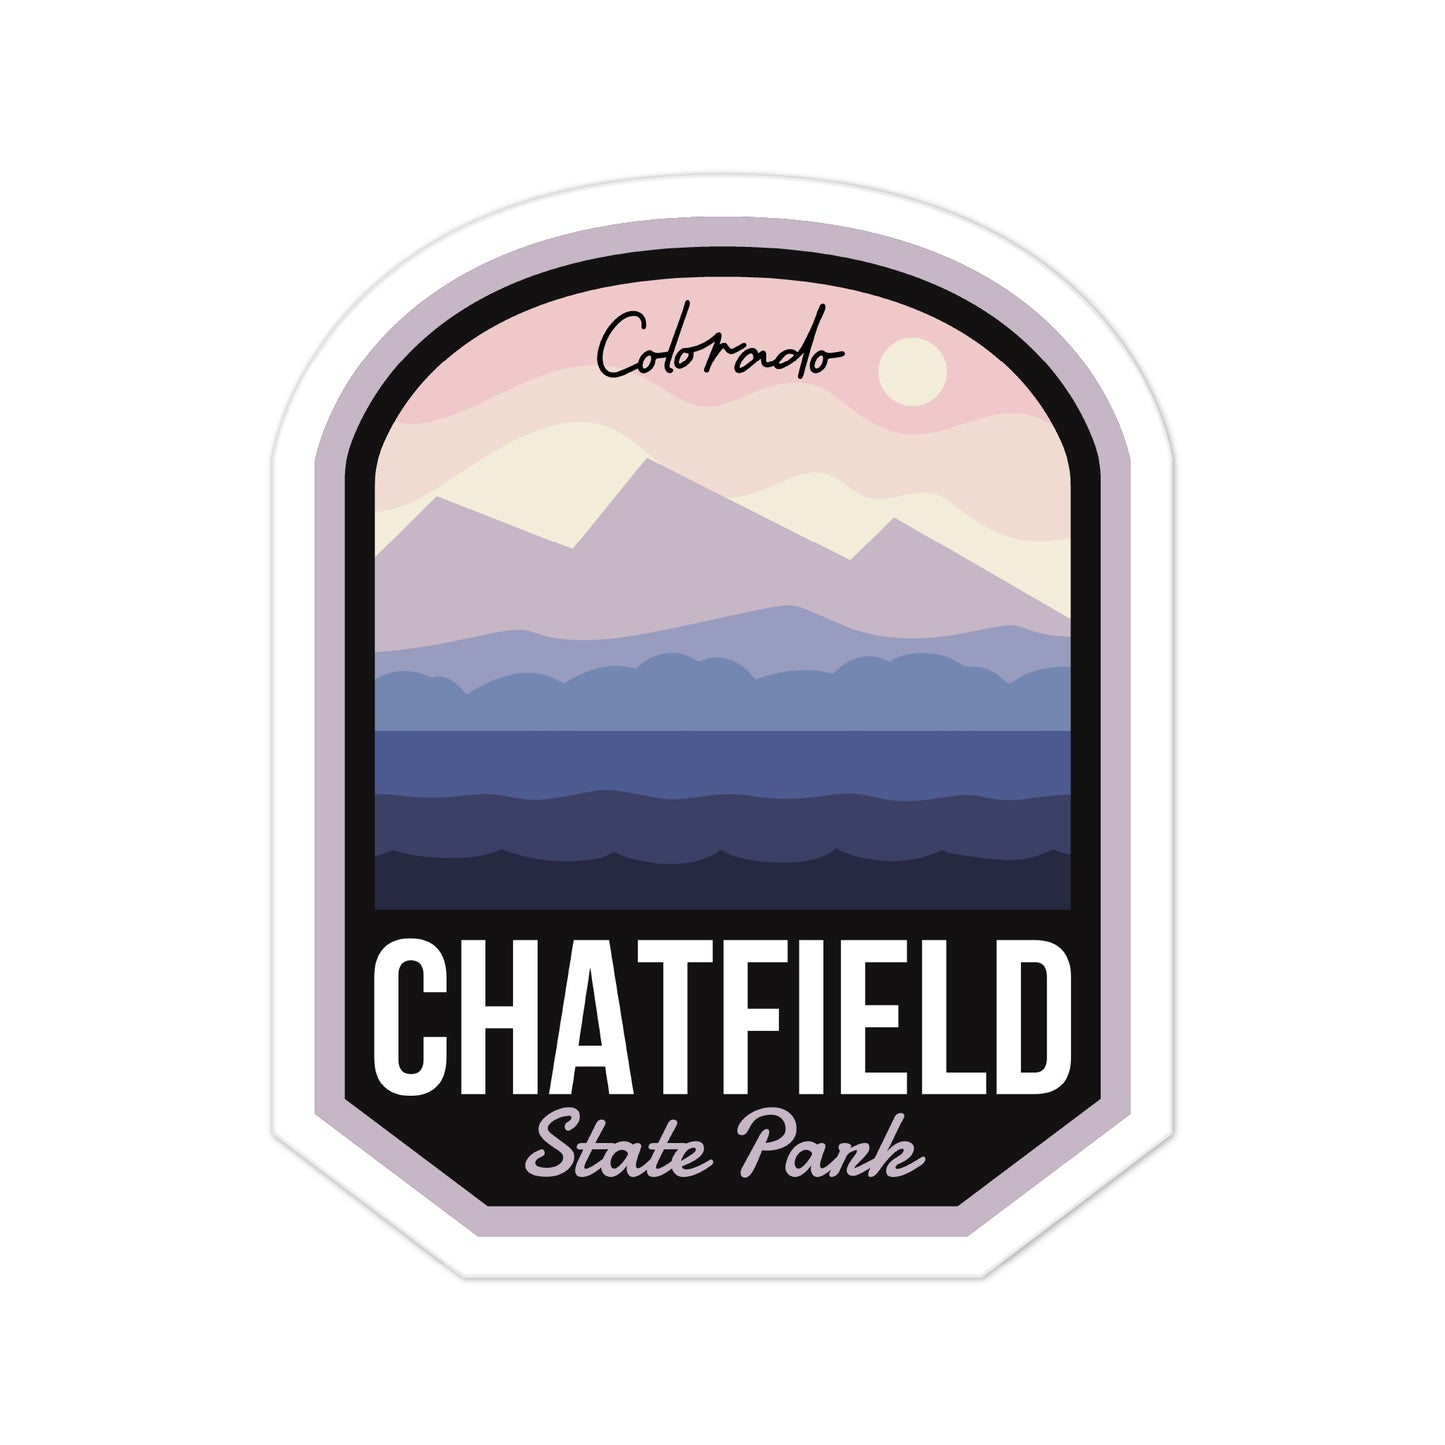 A sticker of Chatfield State Park